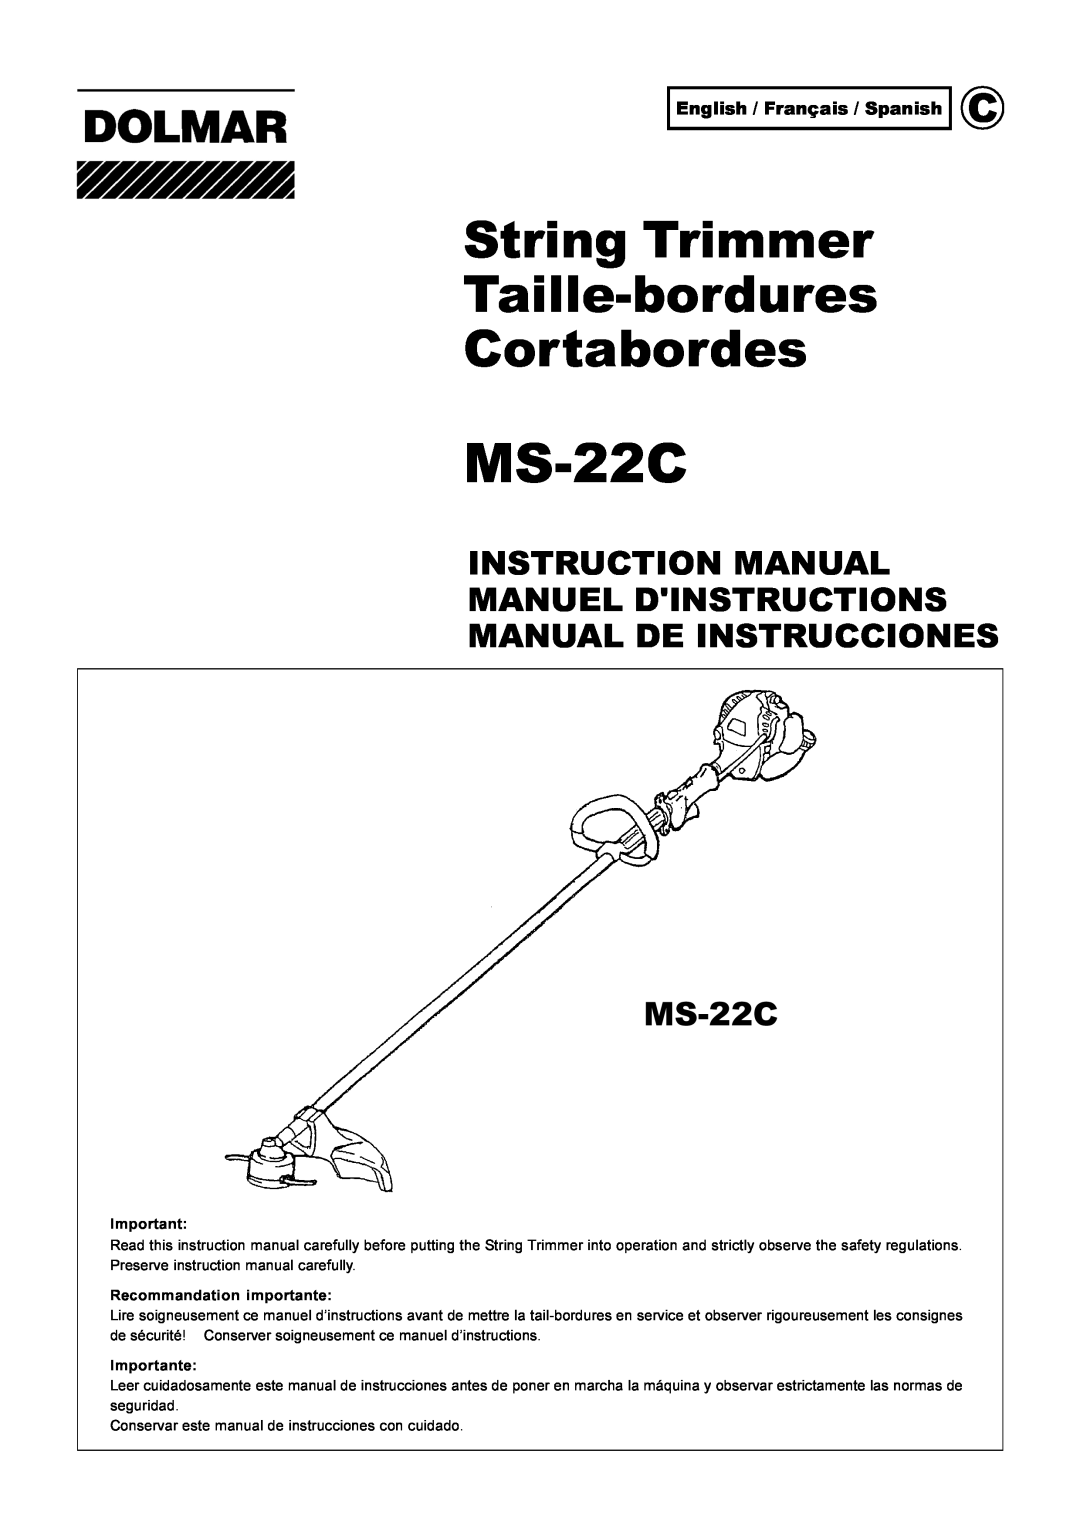 Dolmar MS-22C instruction manual String Trimmer Taille-bordures Cortabordes, English / Français / Spanish 